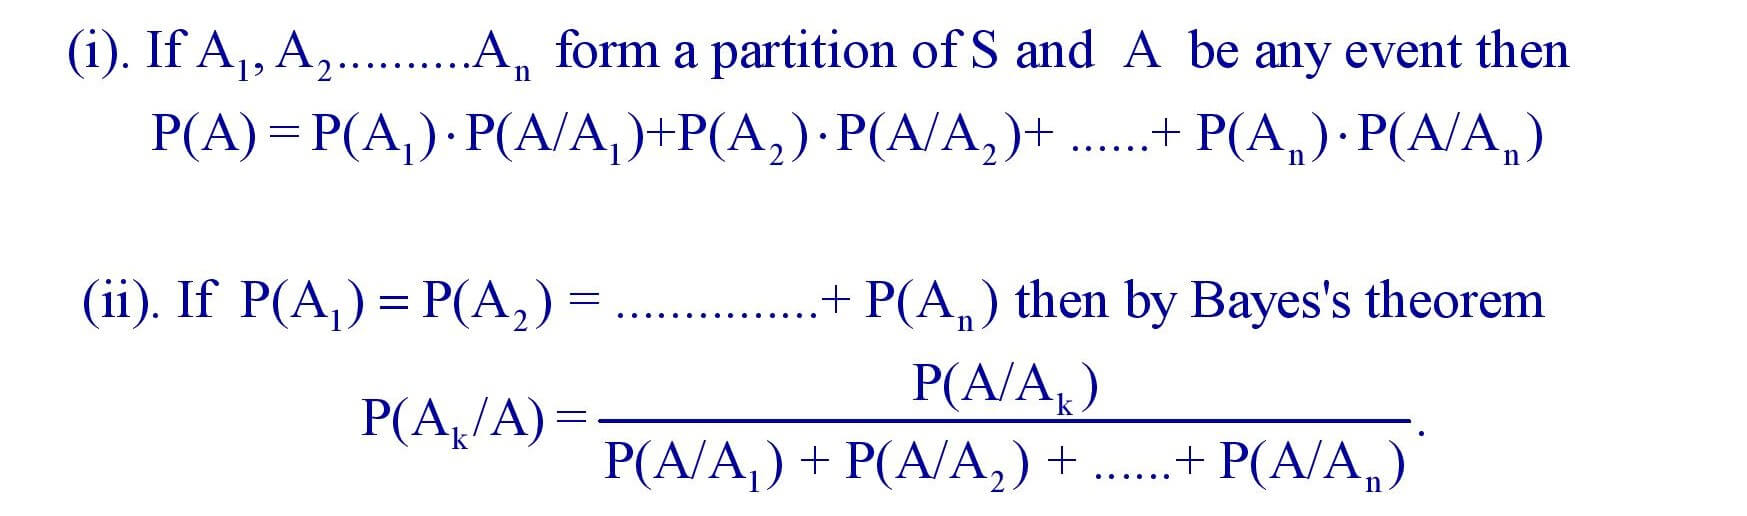 Bayes' s Theorem